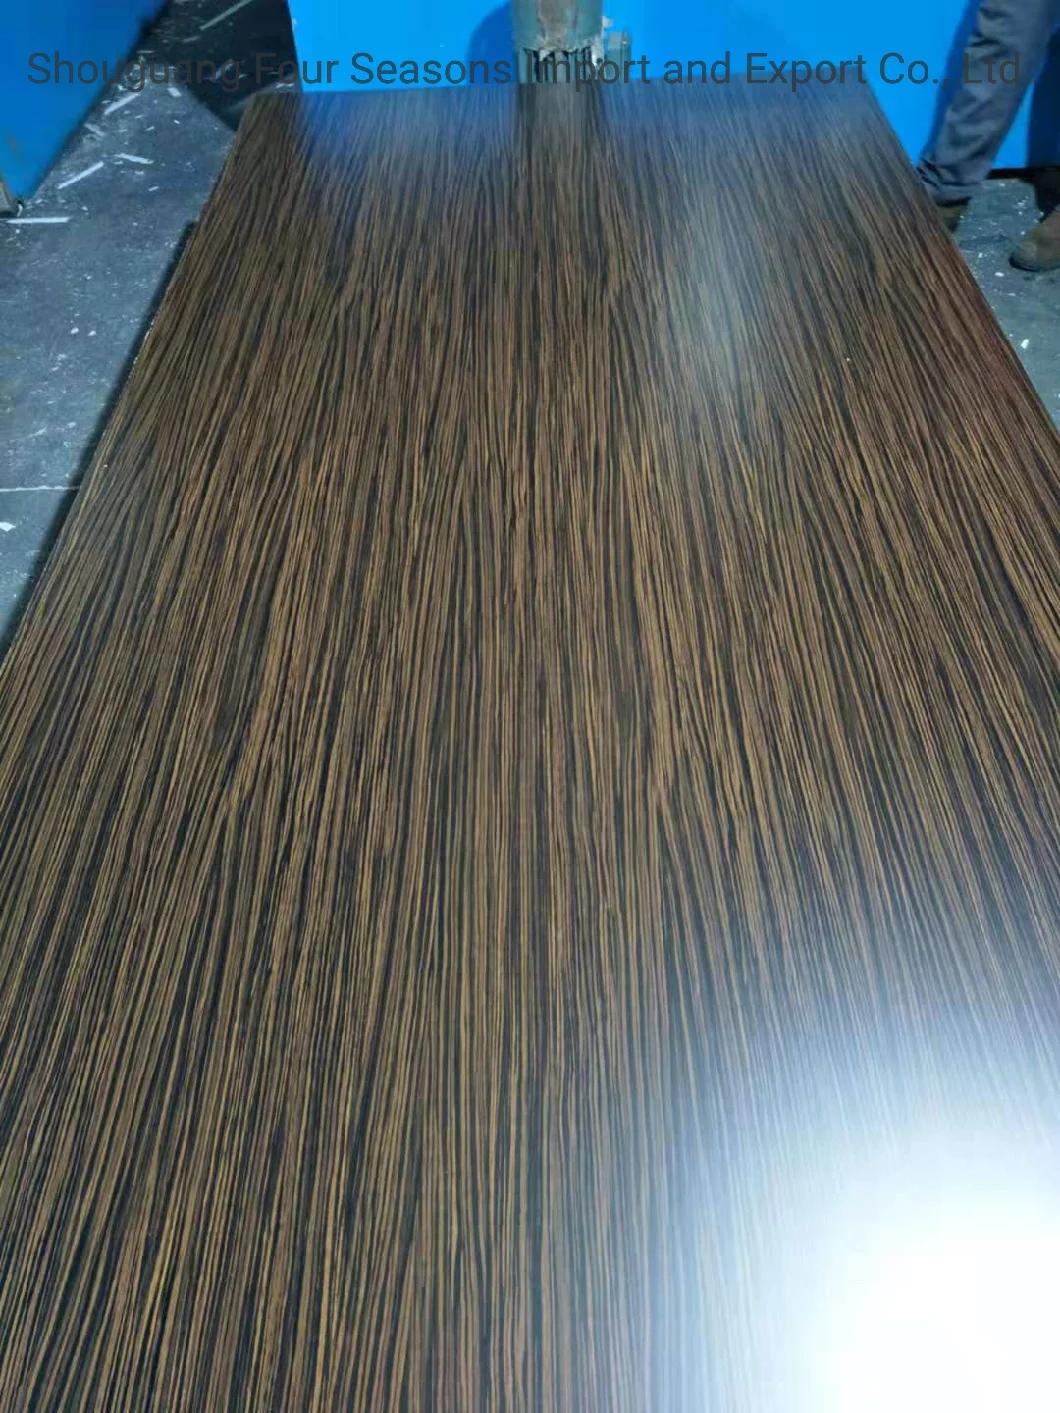 Matt/Stone/Fabric/Leather Surface Finish Melamine MDF for Furniture